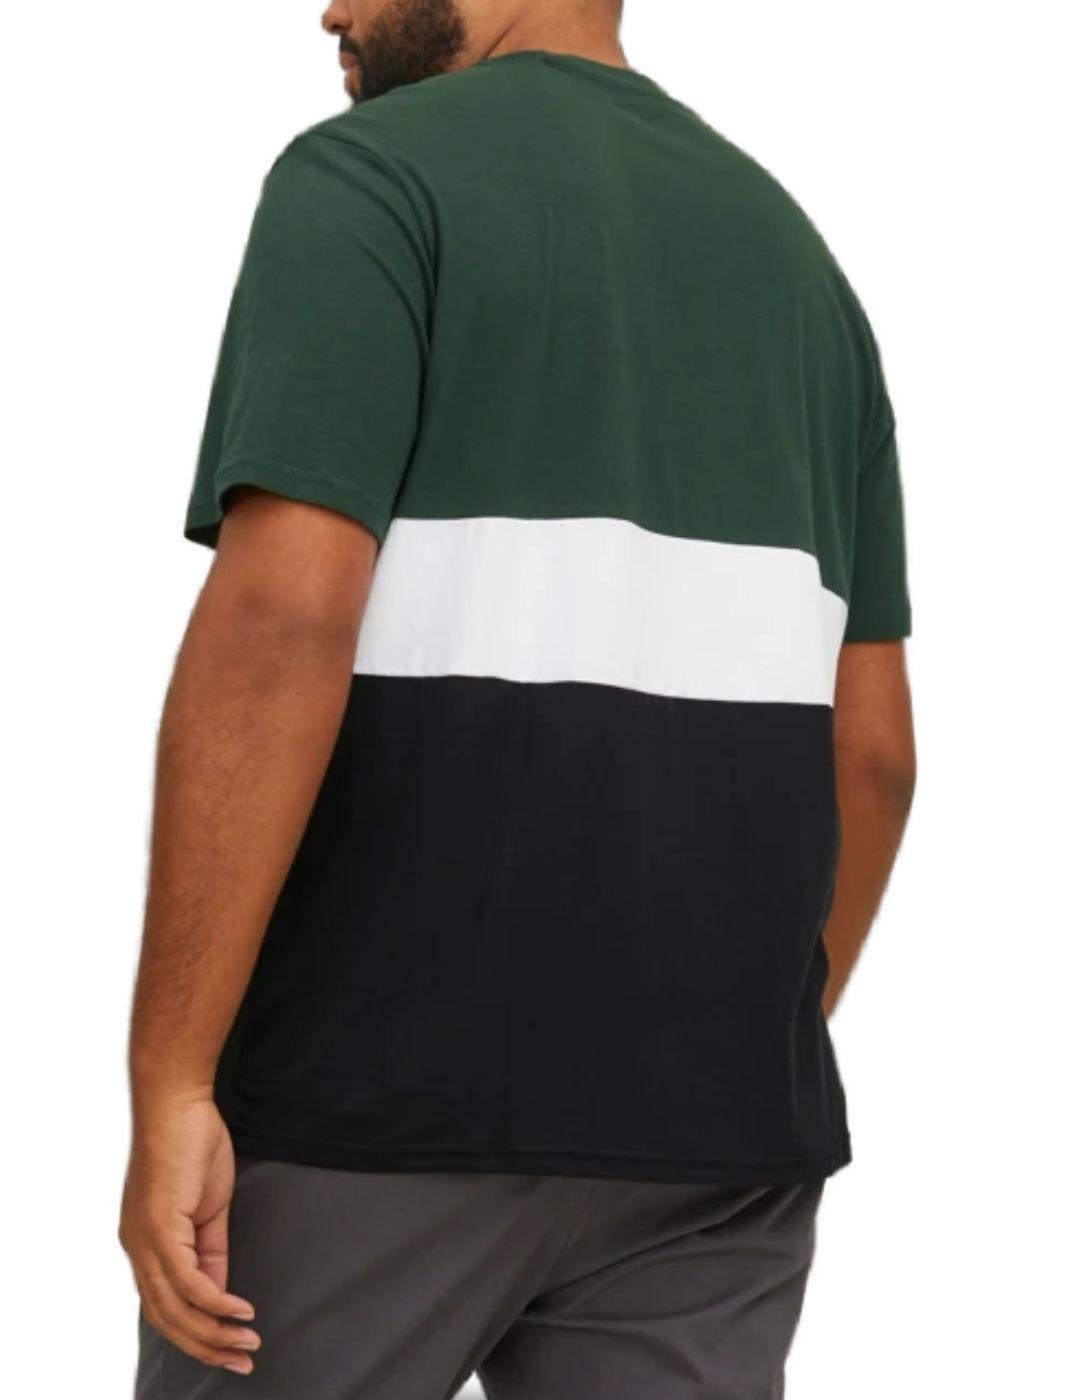 Camiseta Jack&Jones Ereid Plus negro/verde para hombre